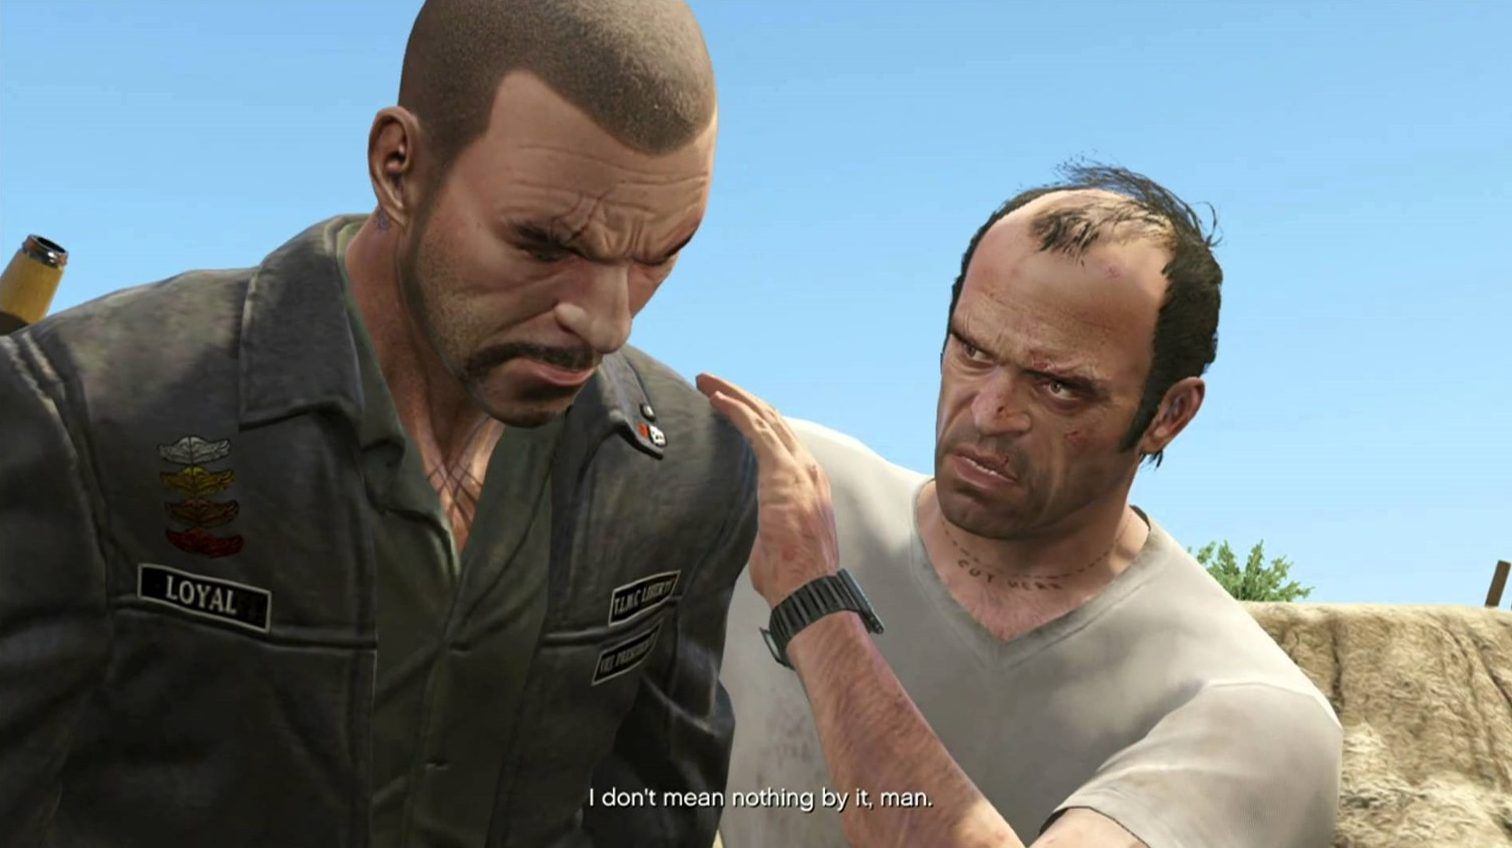 Trevor consoling Jimmy before brutally murdering him